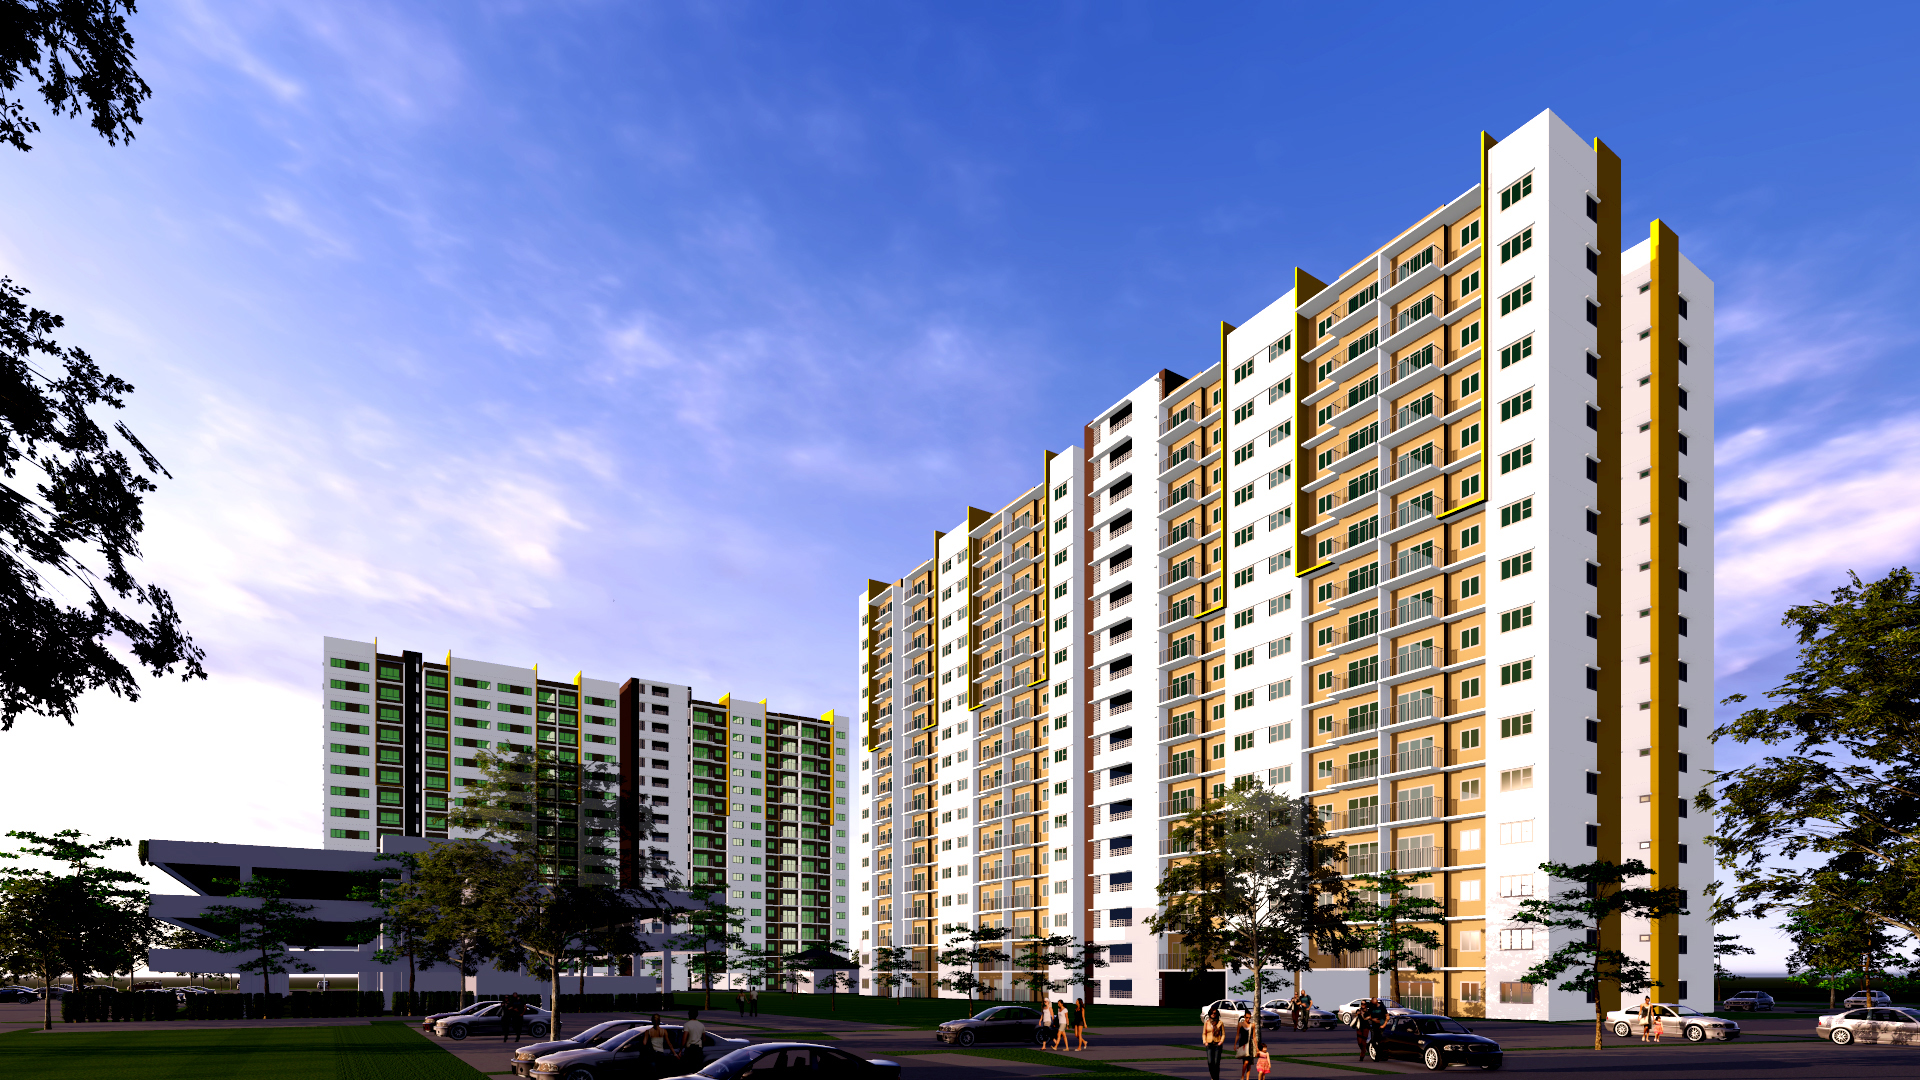 Kota Kemuning affordable housing